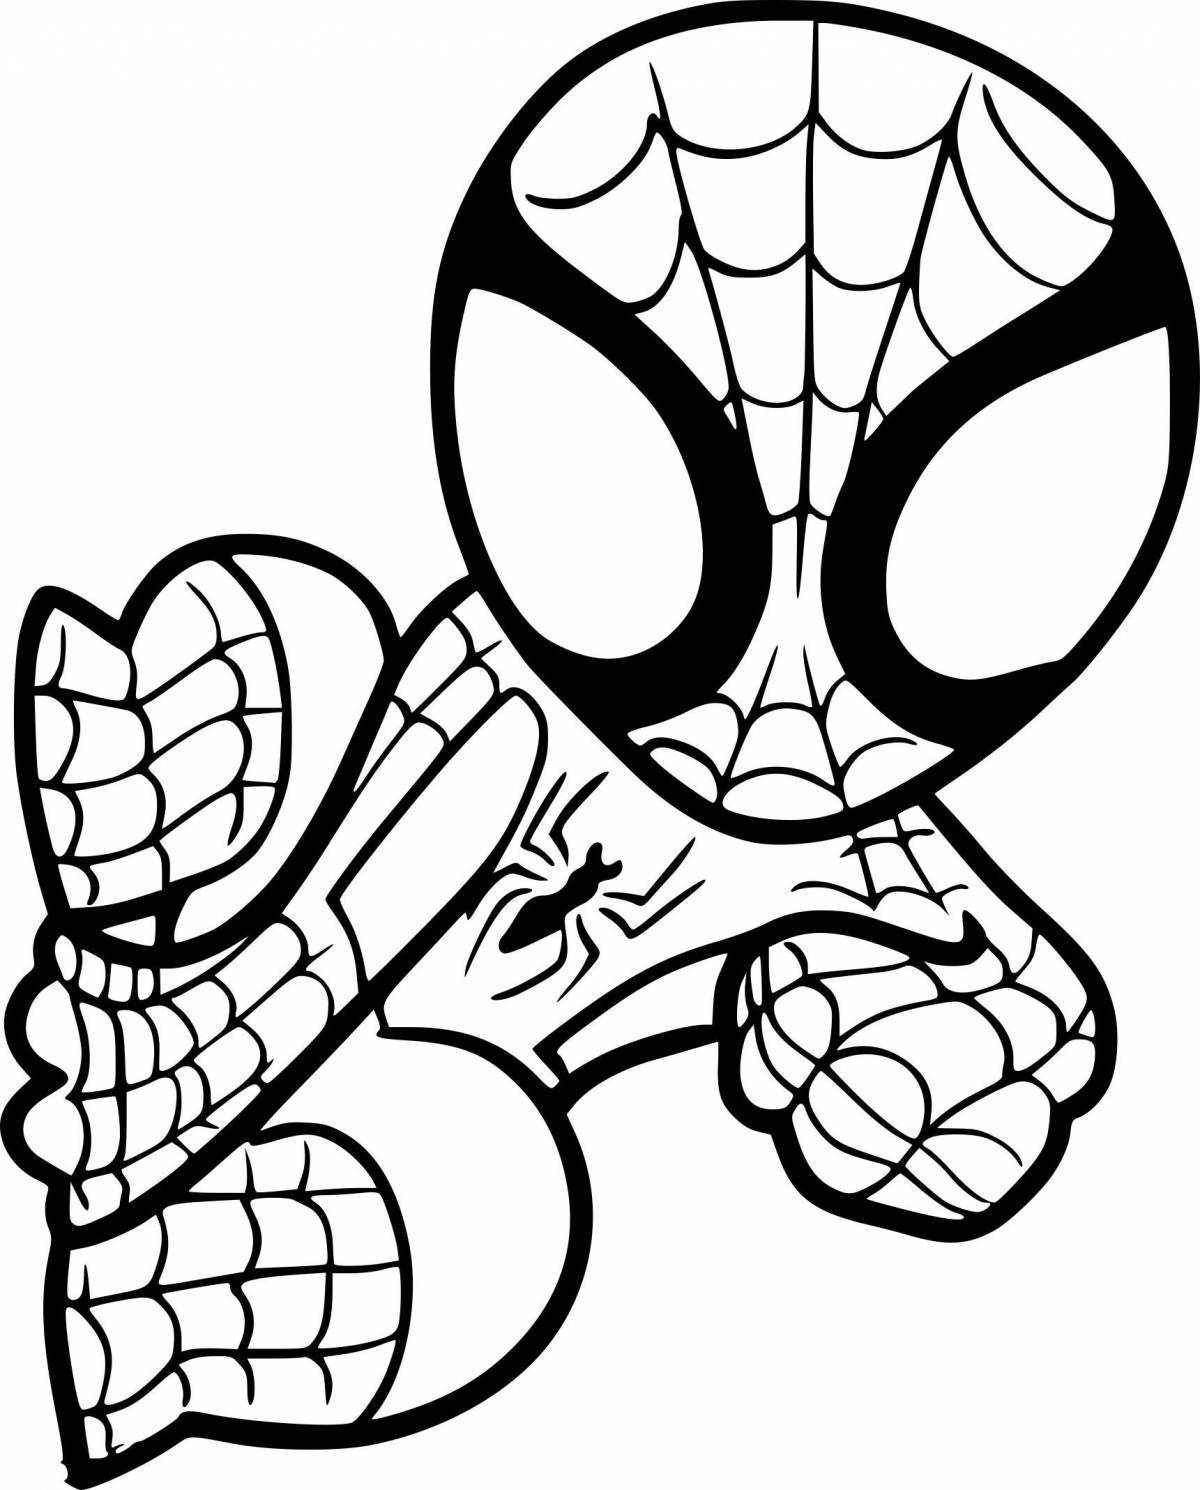 Spiderman fun coloring book for kids